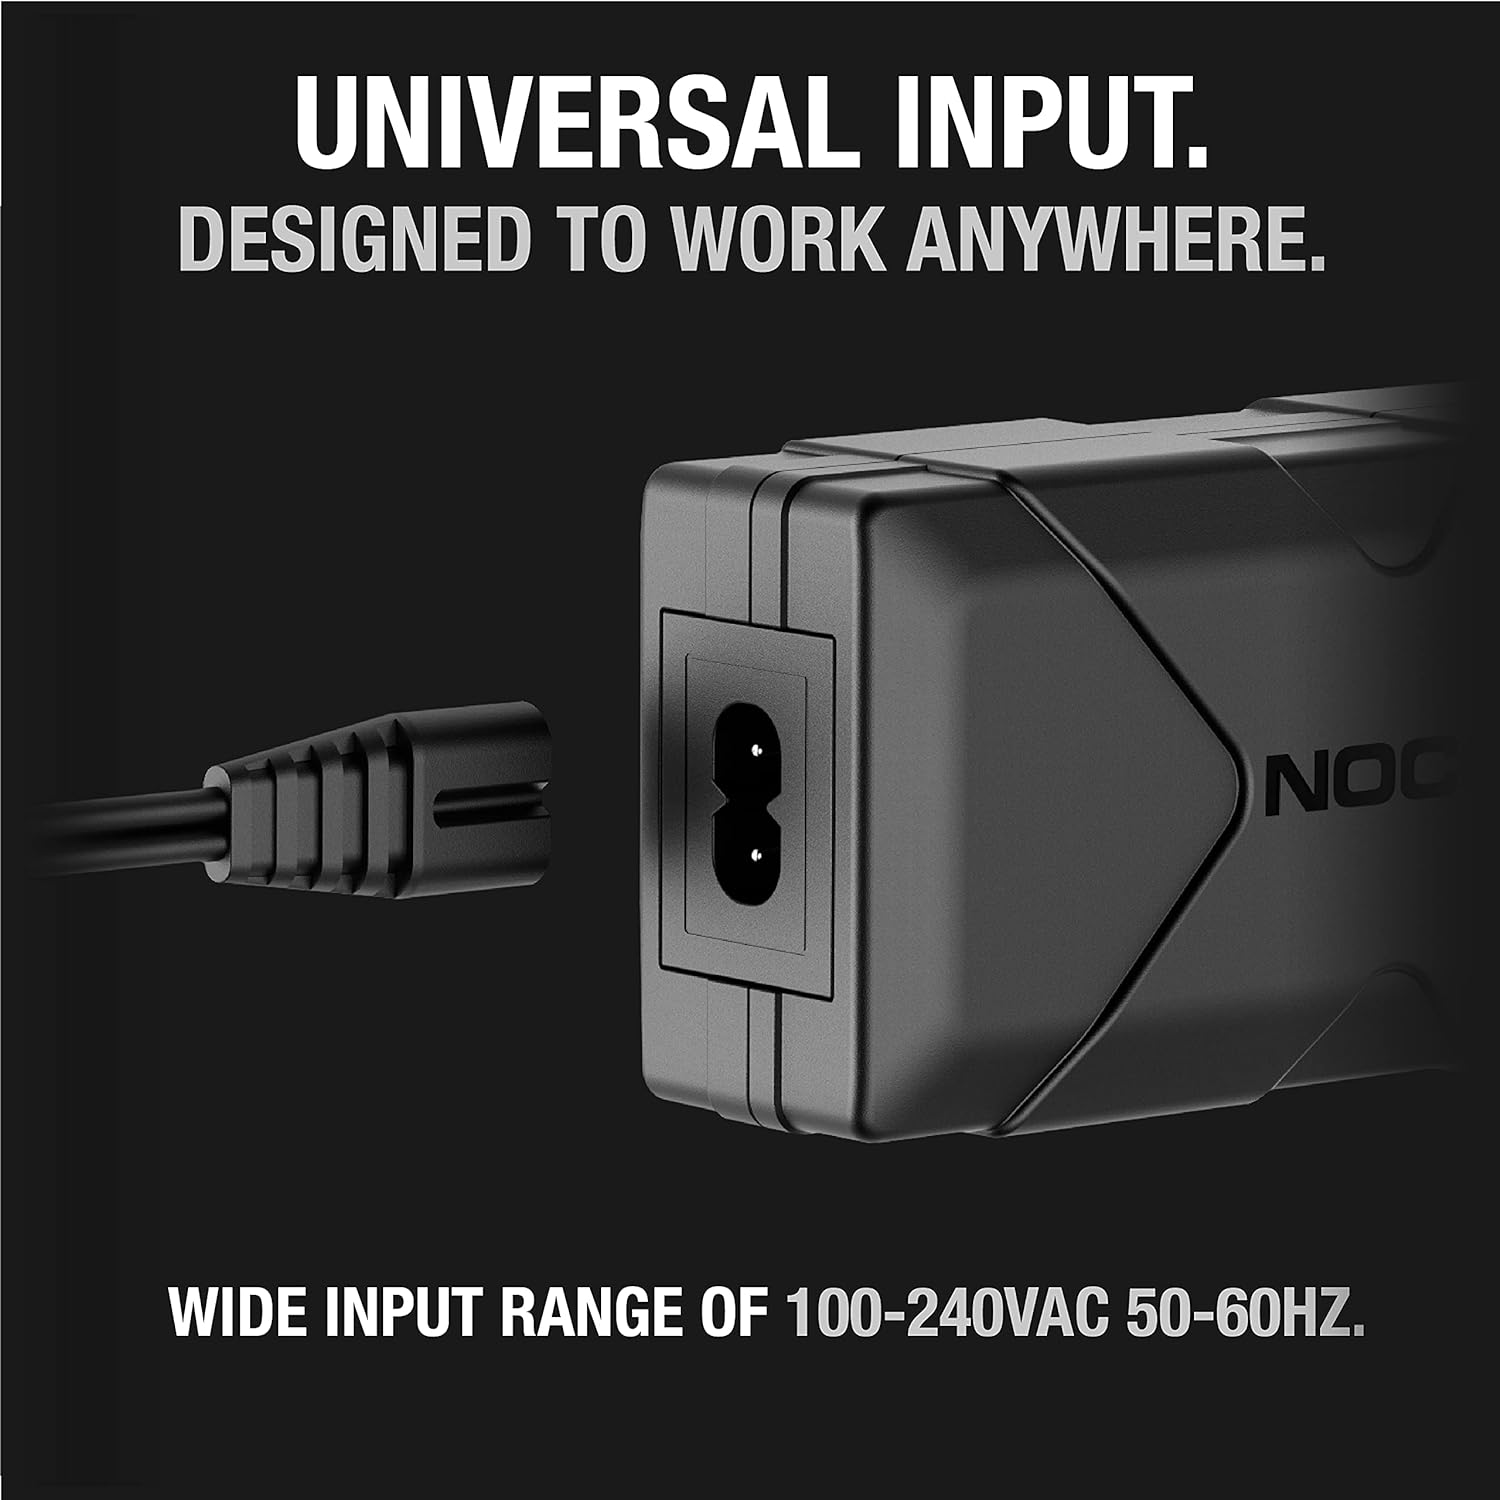 NOCO XGC4 56-Watt XGC Power Adapter For GB70/GB150/GB250+/GB251+/GB500+ NOCO Boost UltraSafe Lithium Jump Starters